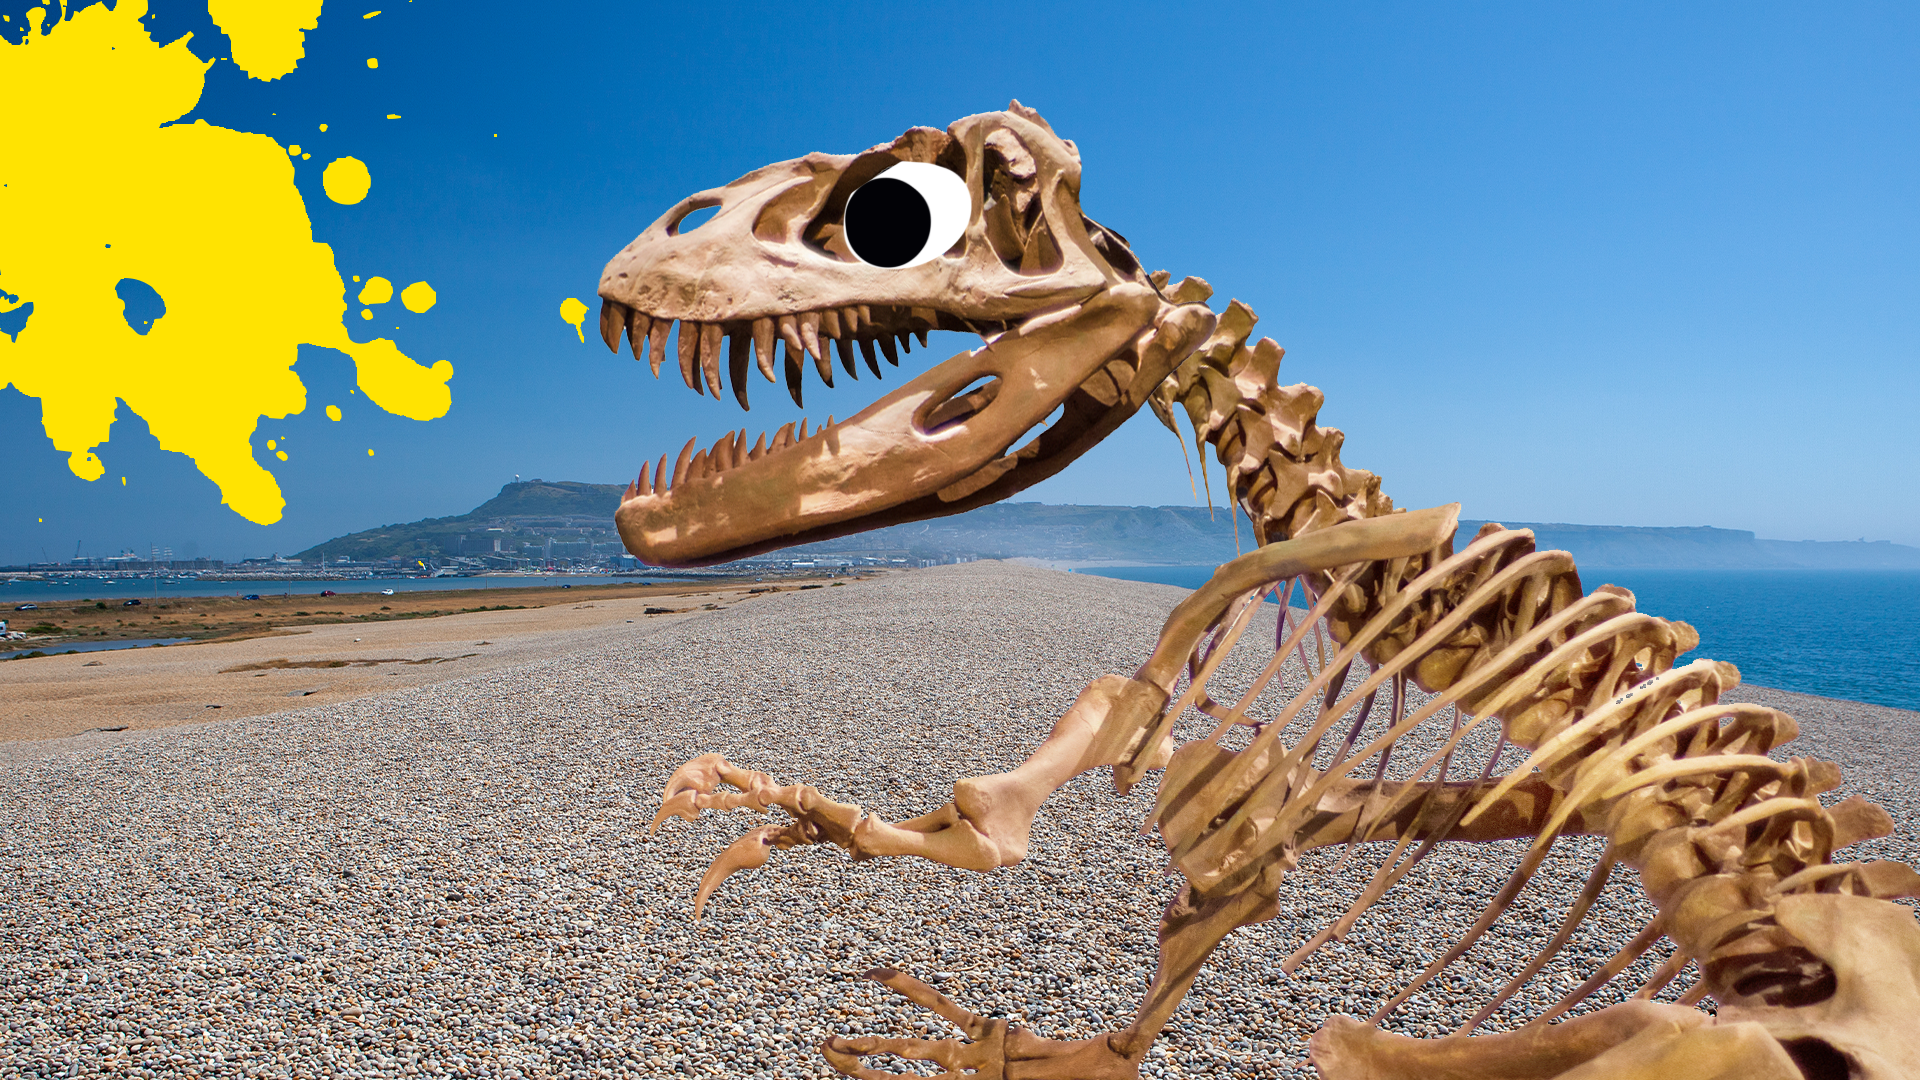 Chesil beach with yellow splat and Beano dinosaur skeleton